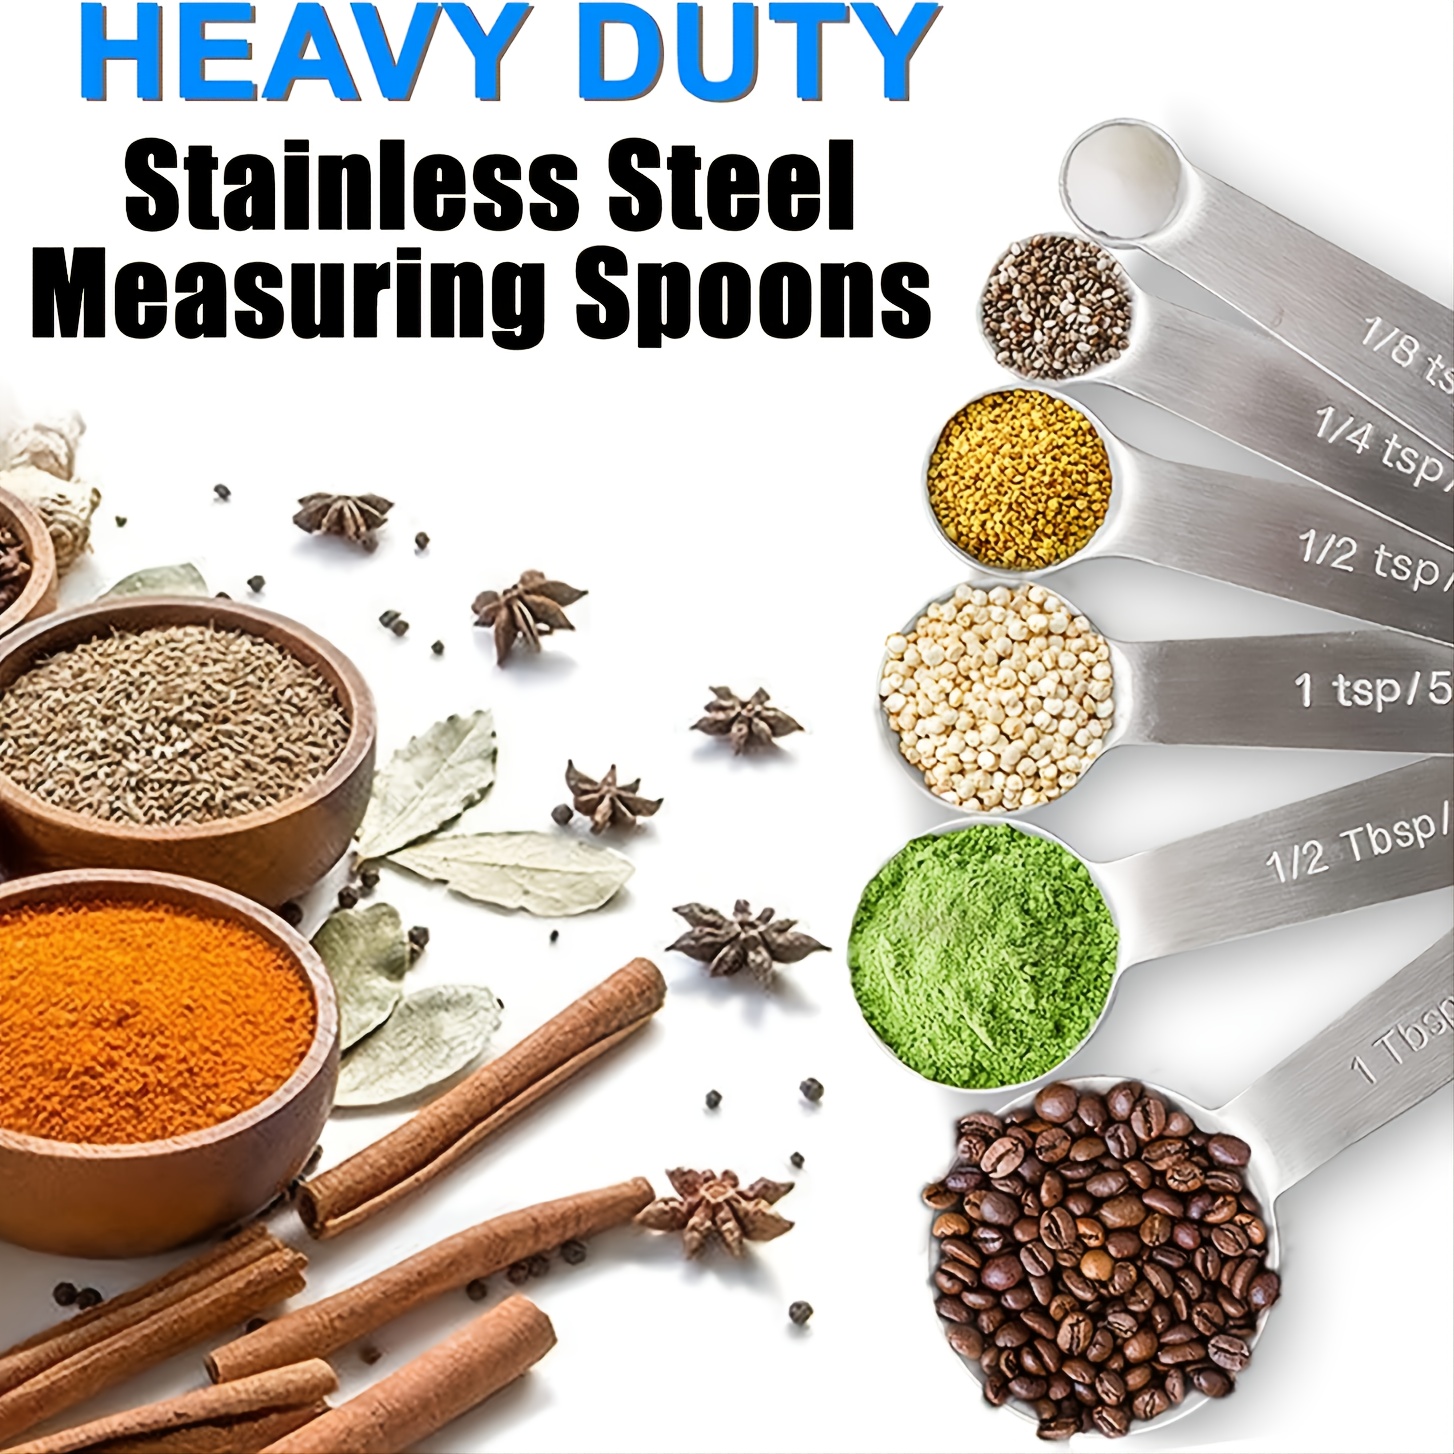 Measuring Spoons, Premium Heavy Duty Stainless Steel Measuring